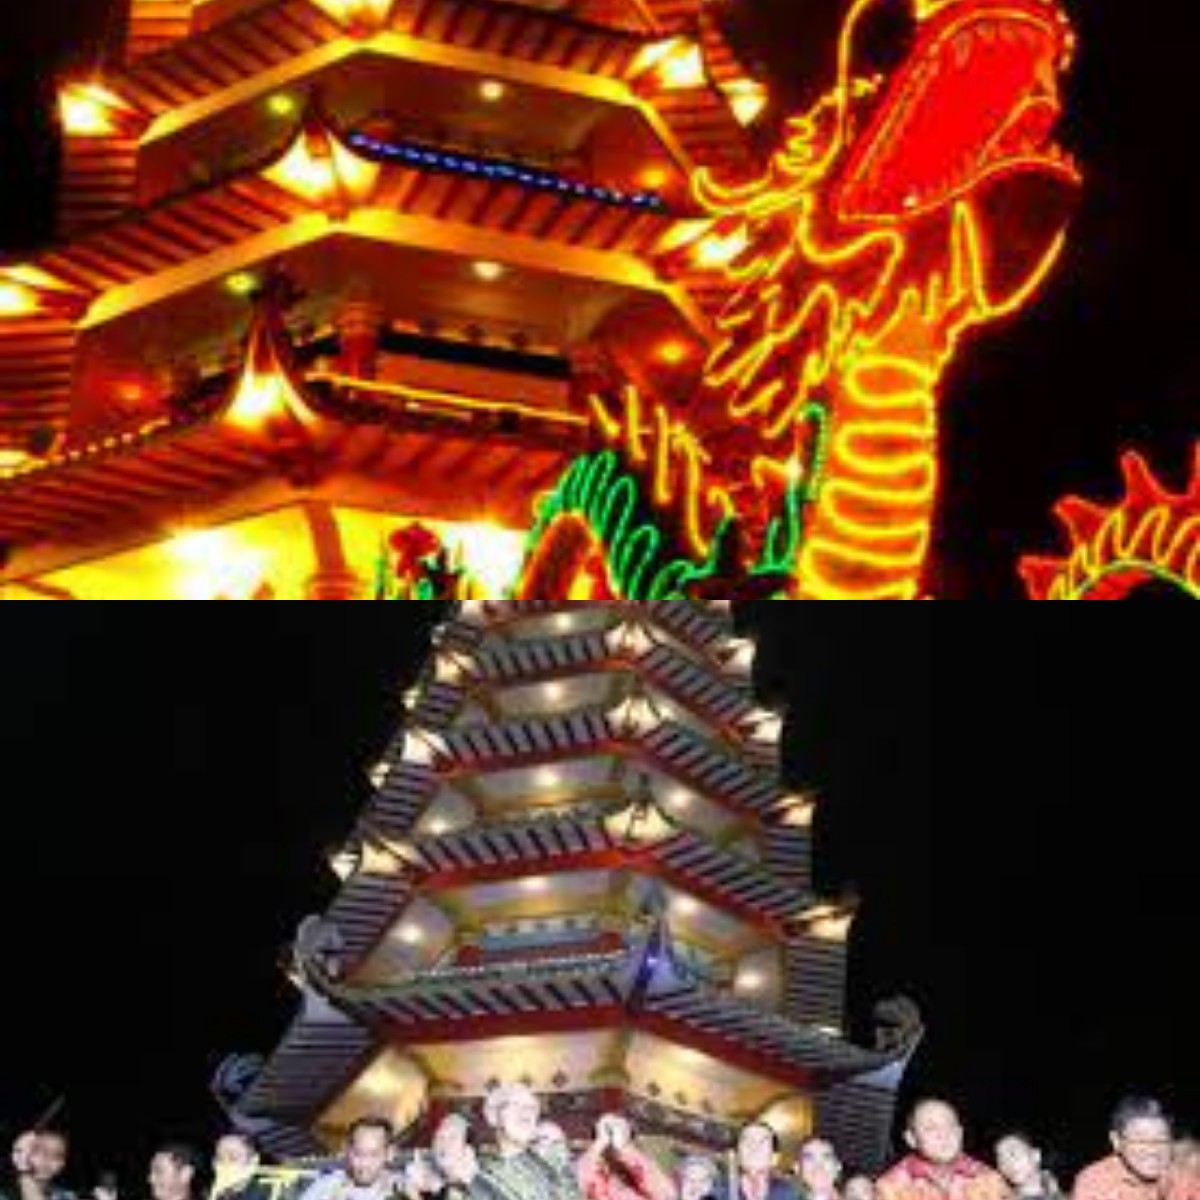 Persembahakan Keajaiban Budaya dan Tradisi Saat Perayaan Tahun Baru Imlek di Pulau Kemaro Palembang 